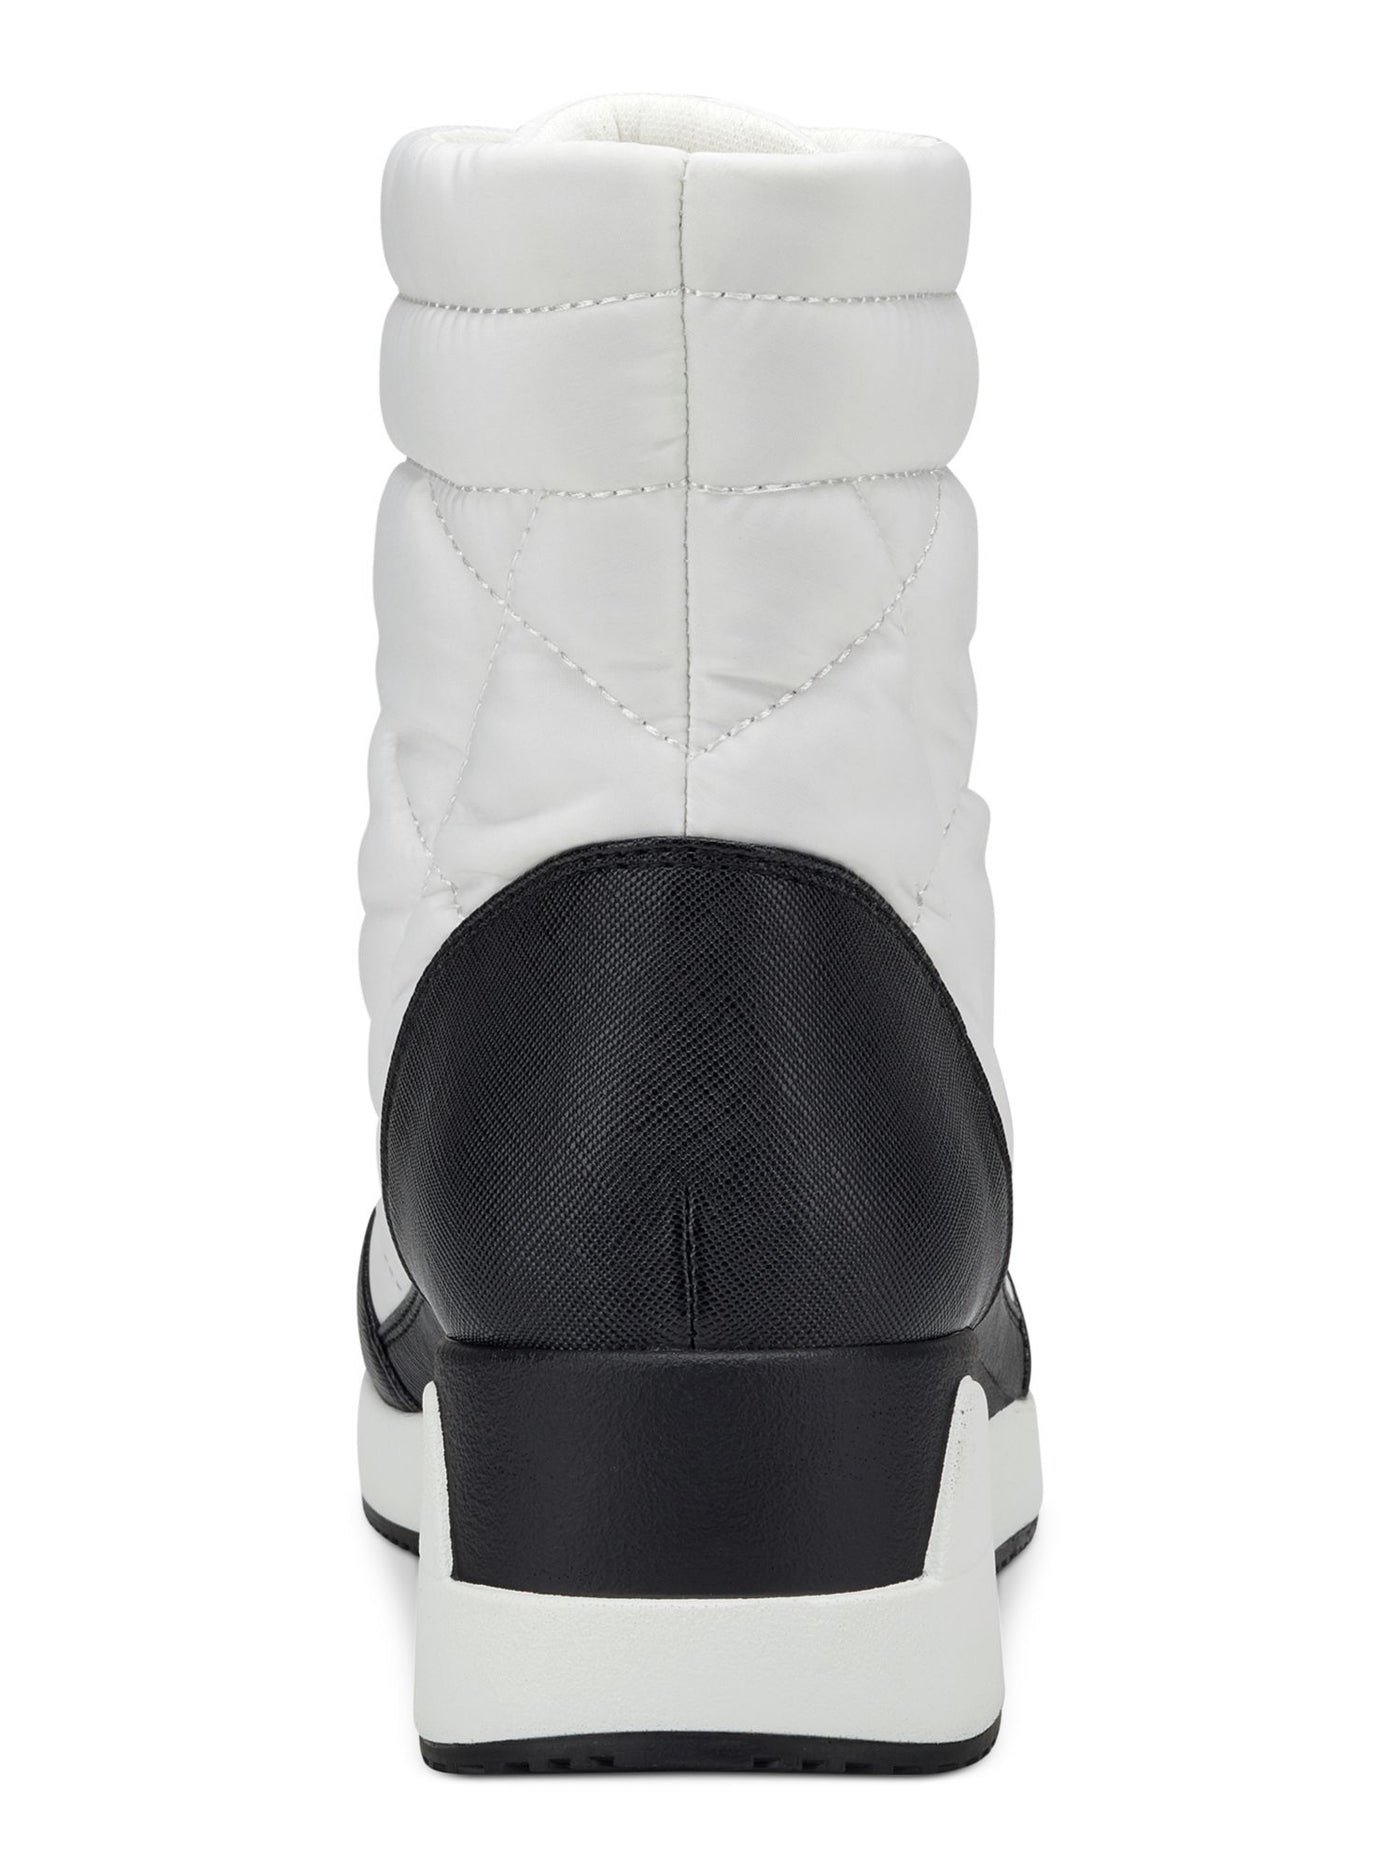 ALFANI Womens White Mixed Media Cushioned Whitnee Round Toe Wedge Zip-Up Sneakers Shoes 8.5 M